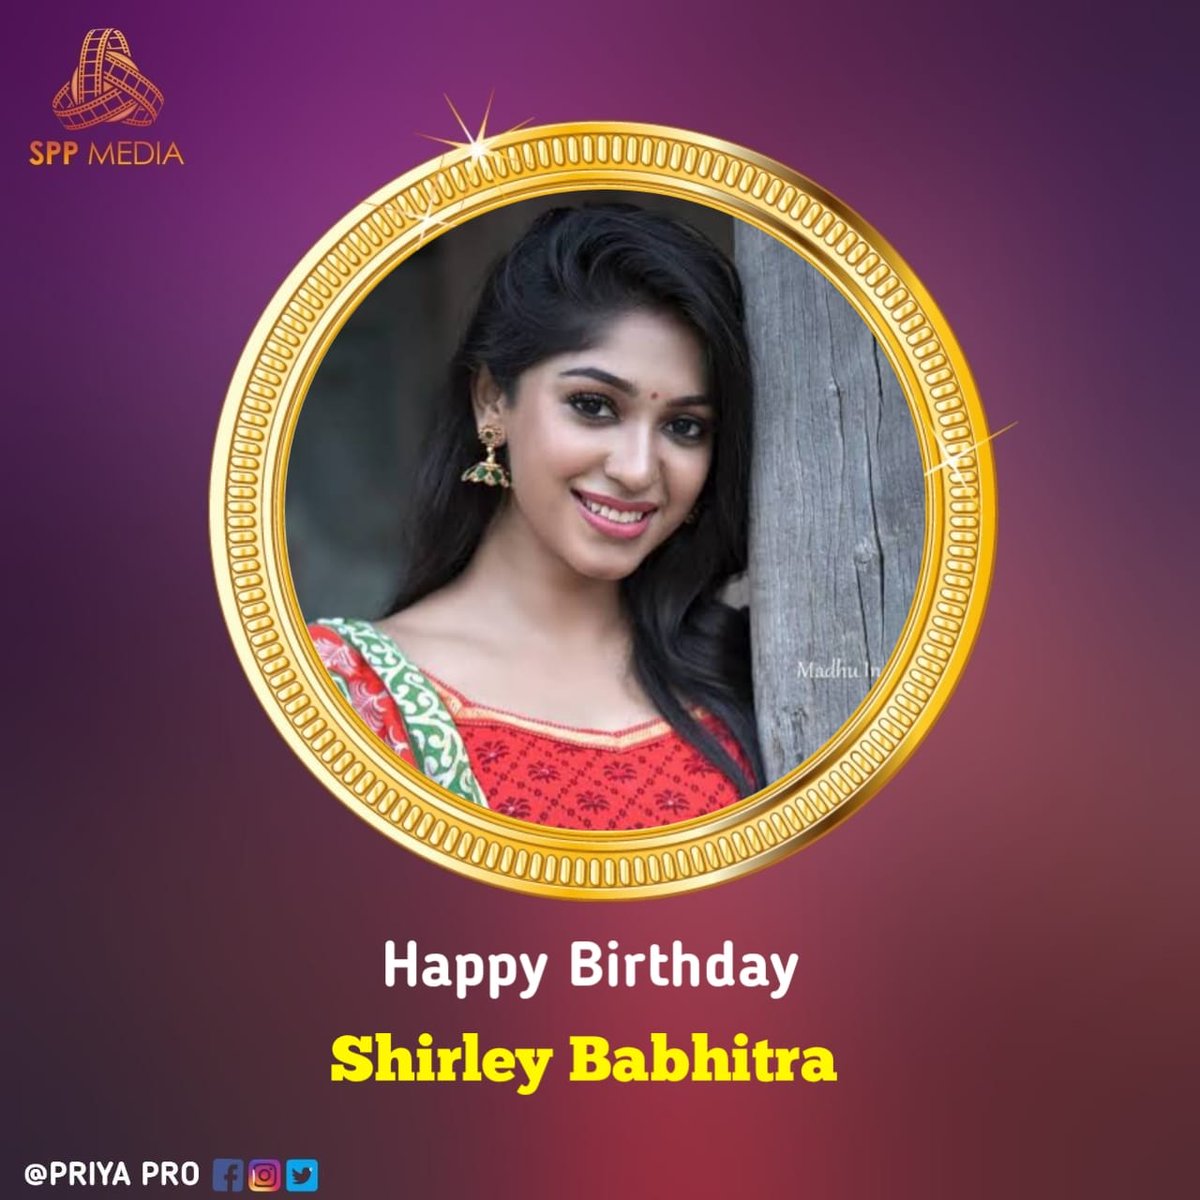 #SPP Media Wishing Actress #ShirleyBabhitra a very happy birthday and all success ahead!💐 #HBDShirleyBabhitra @PRO_Priya @spp_media